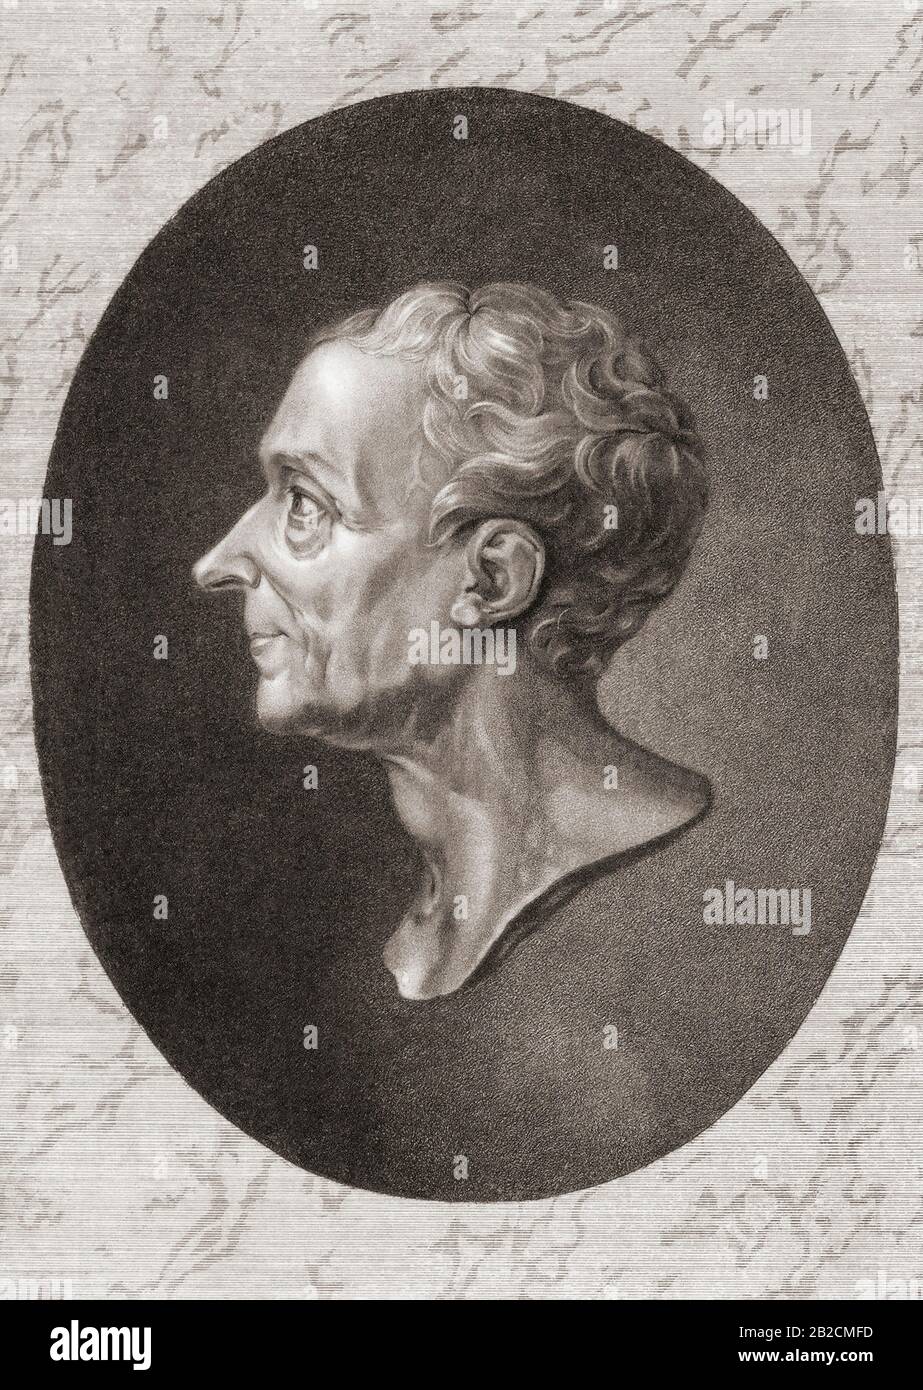 Charles-Louis de Secondat, Baron de la Brède et de Montesquieu, 1689 - 1755, aka Montesquieu. Giudice francese, uomo di lettere e filosofo politico. Foto Stock